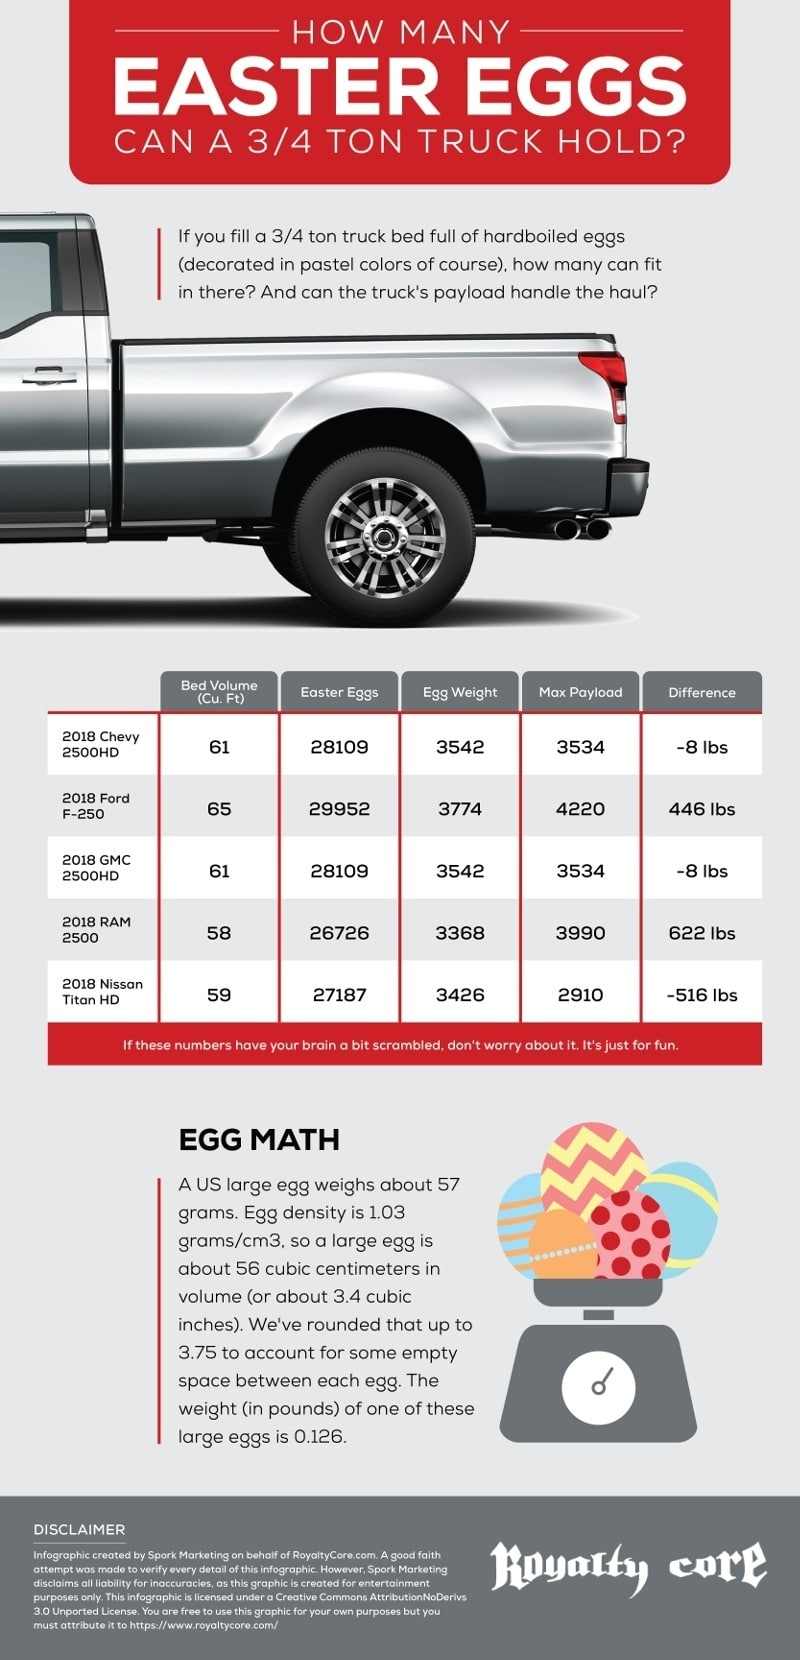 Wie viele Ostereier kann Ihr Lieblings-HD-Truck liefern?